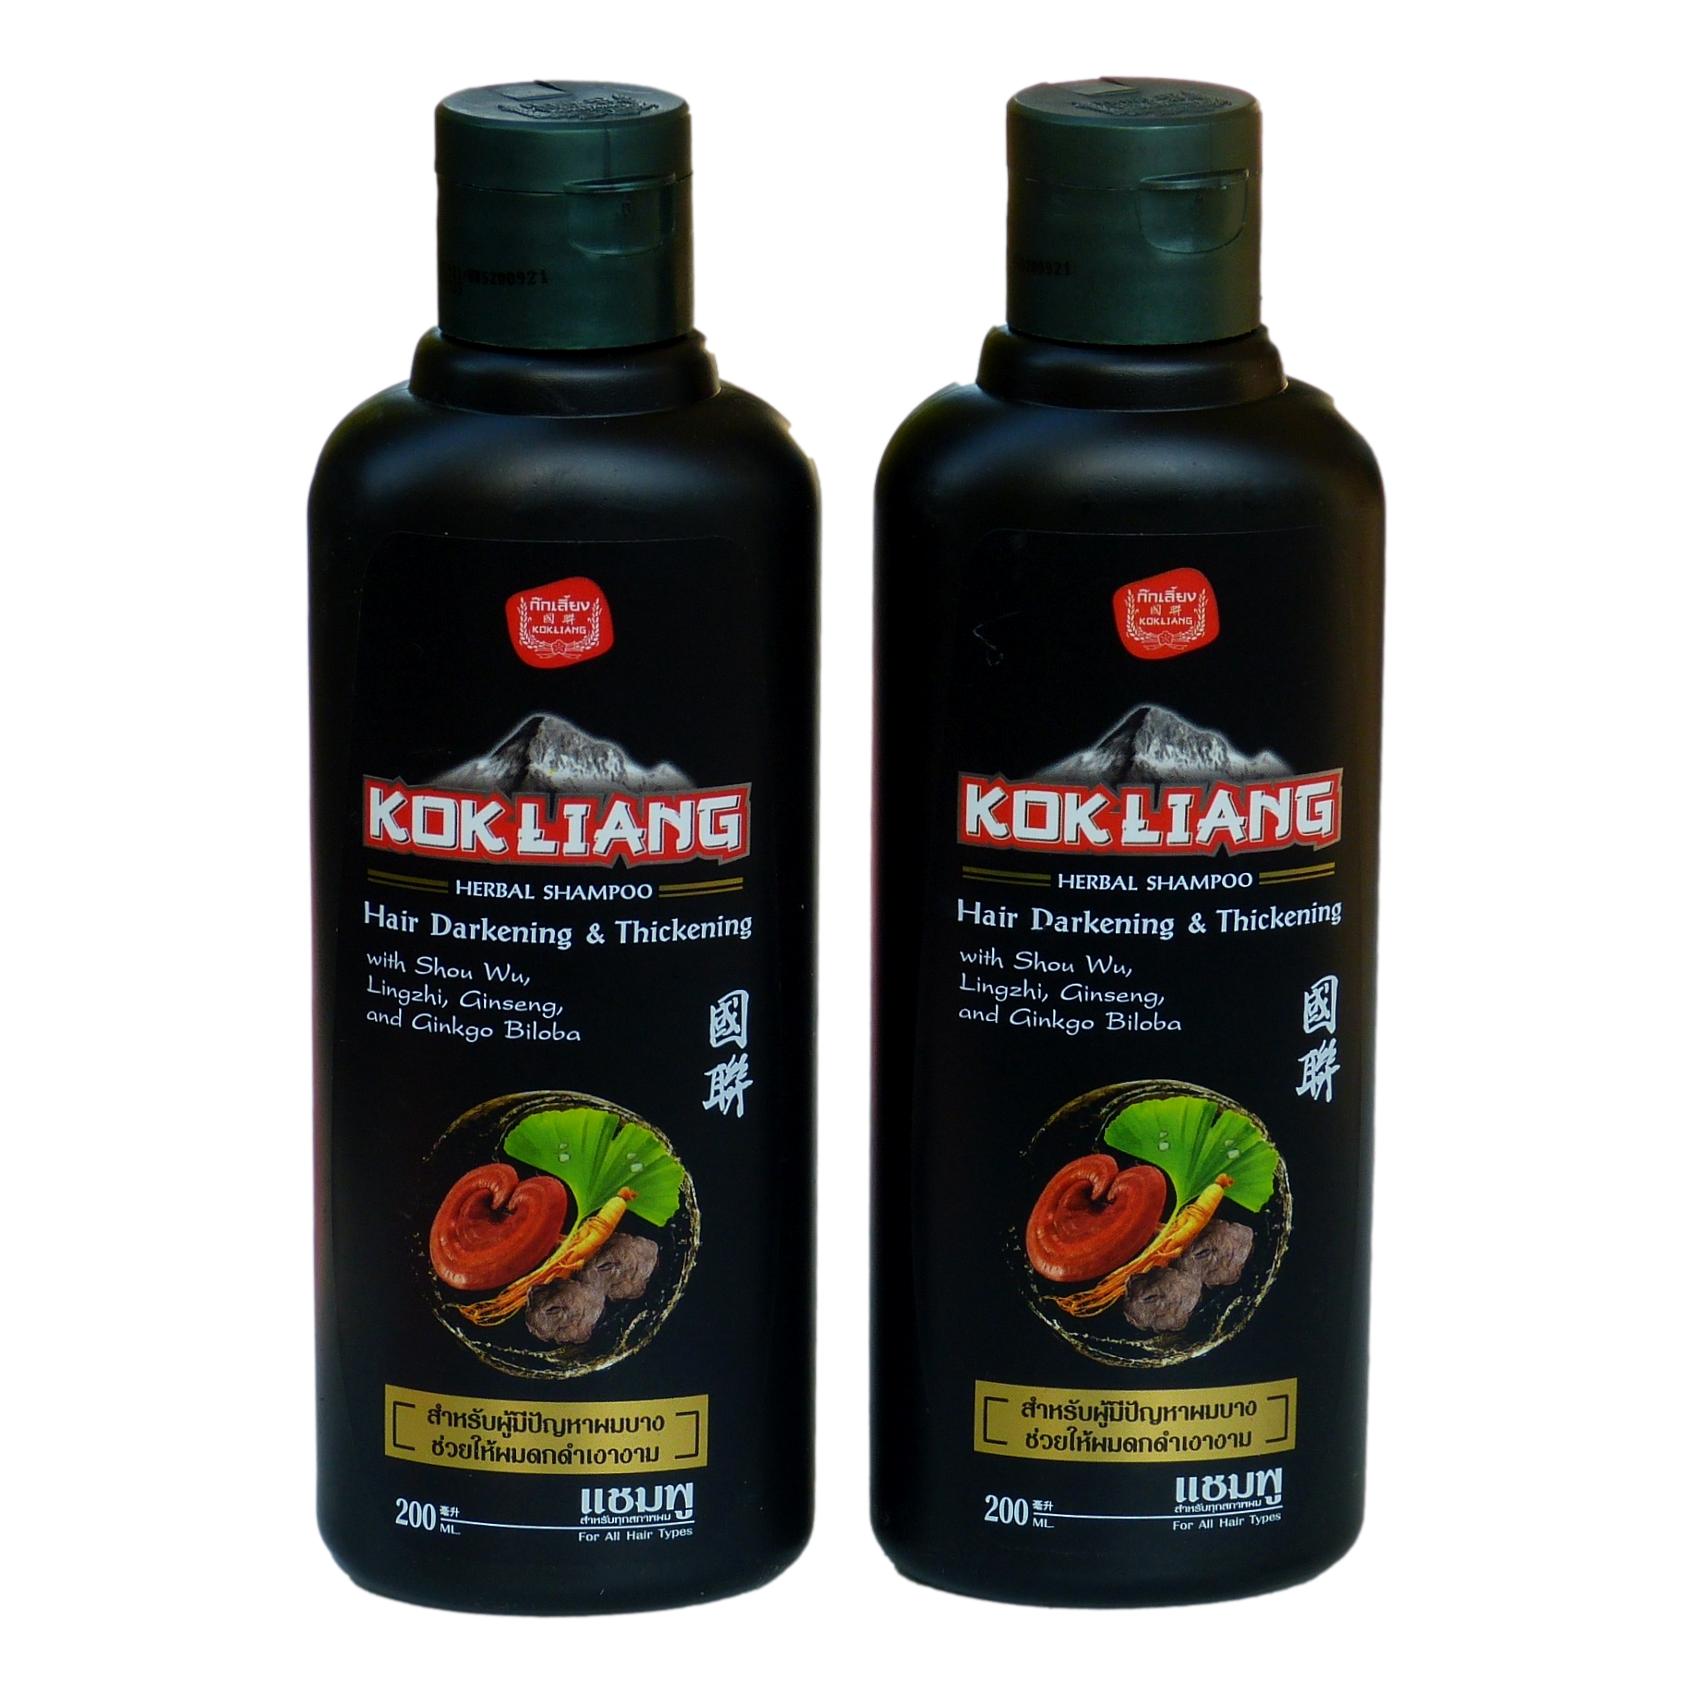 Kok Liang Hair Darkening & Thickening Herbal Shampoo Pack of 2 - Asian Beauty Supply